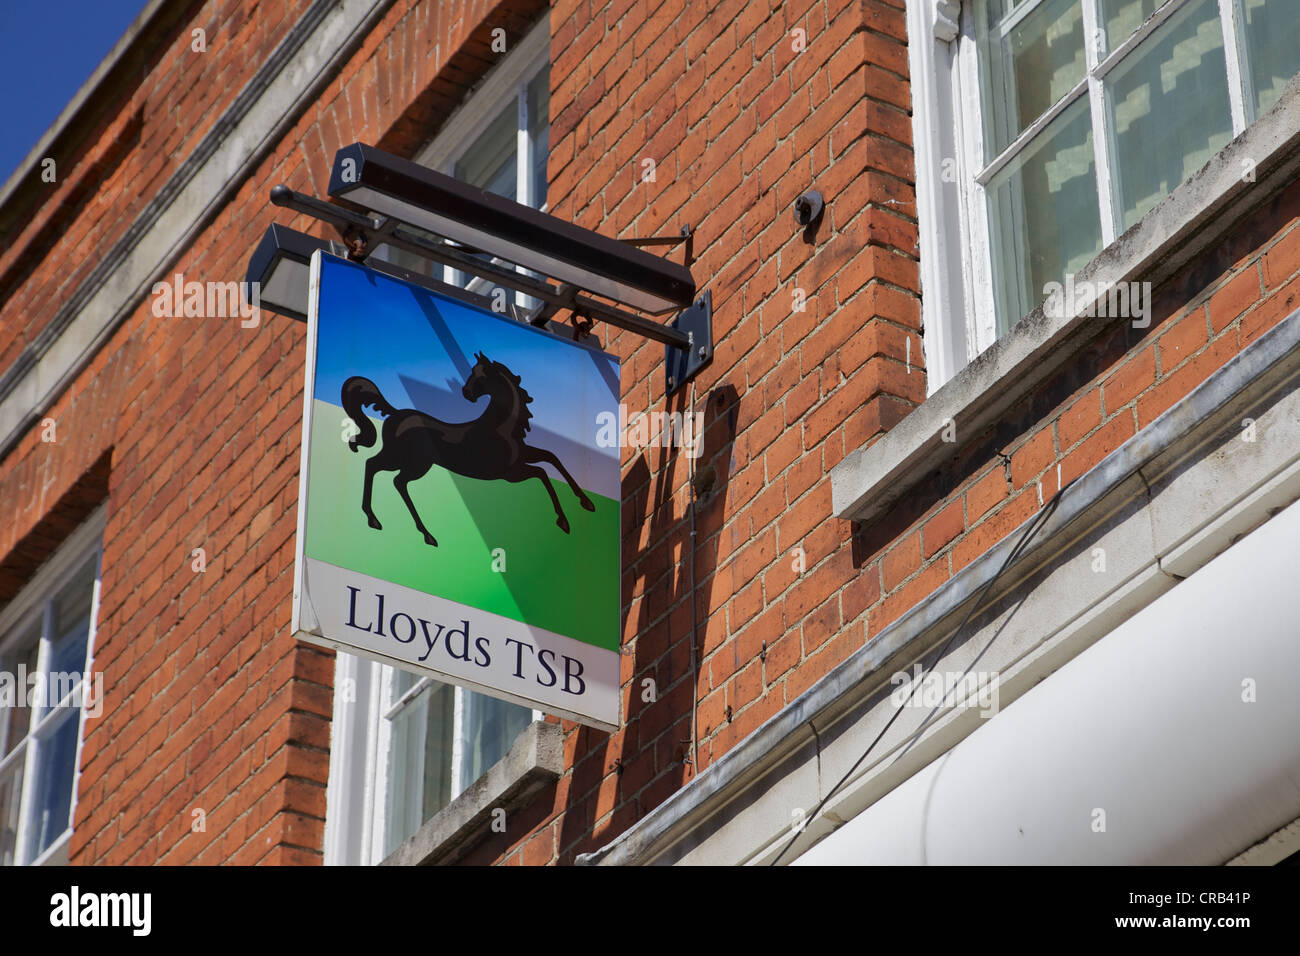 A Lloyds TSB bank sign, England Stock Photo